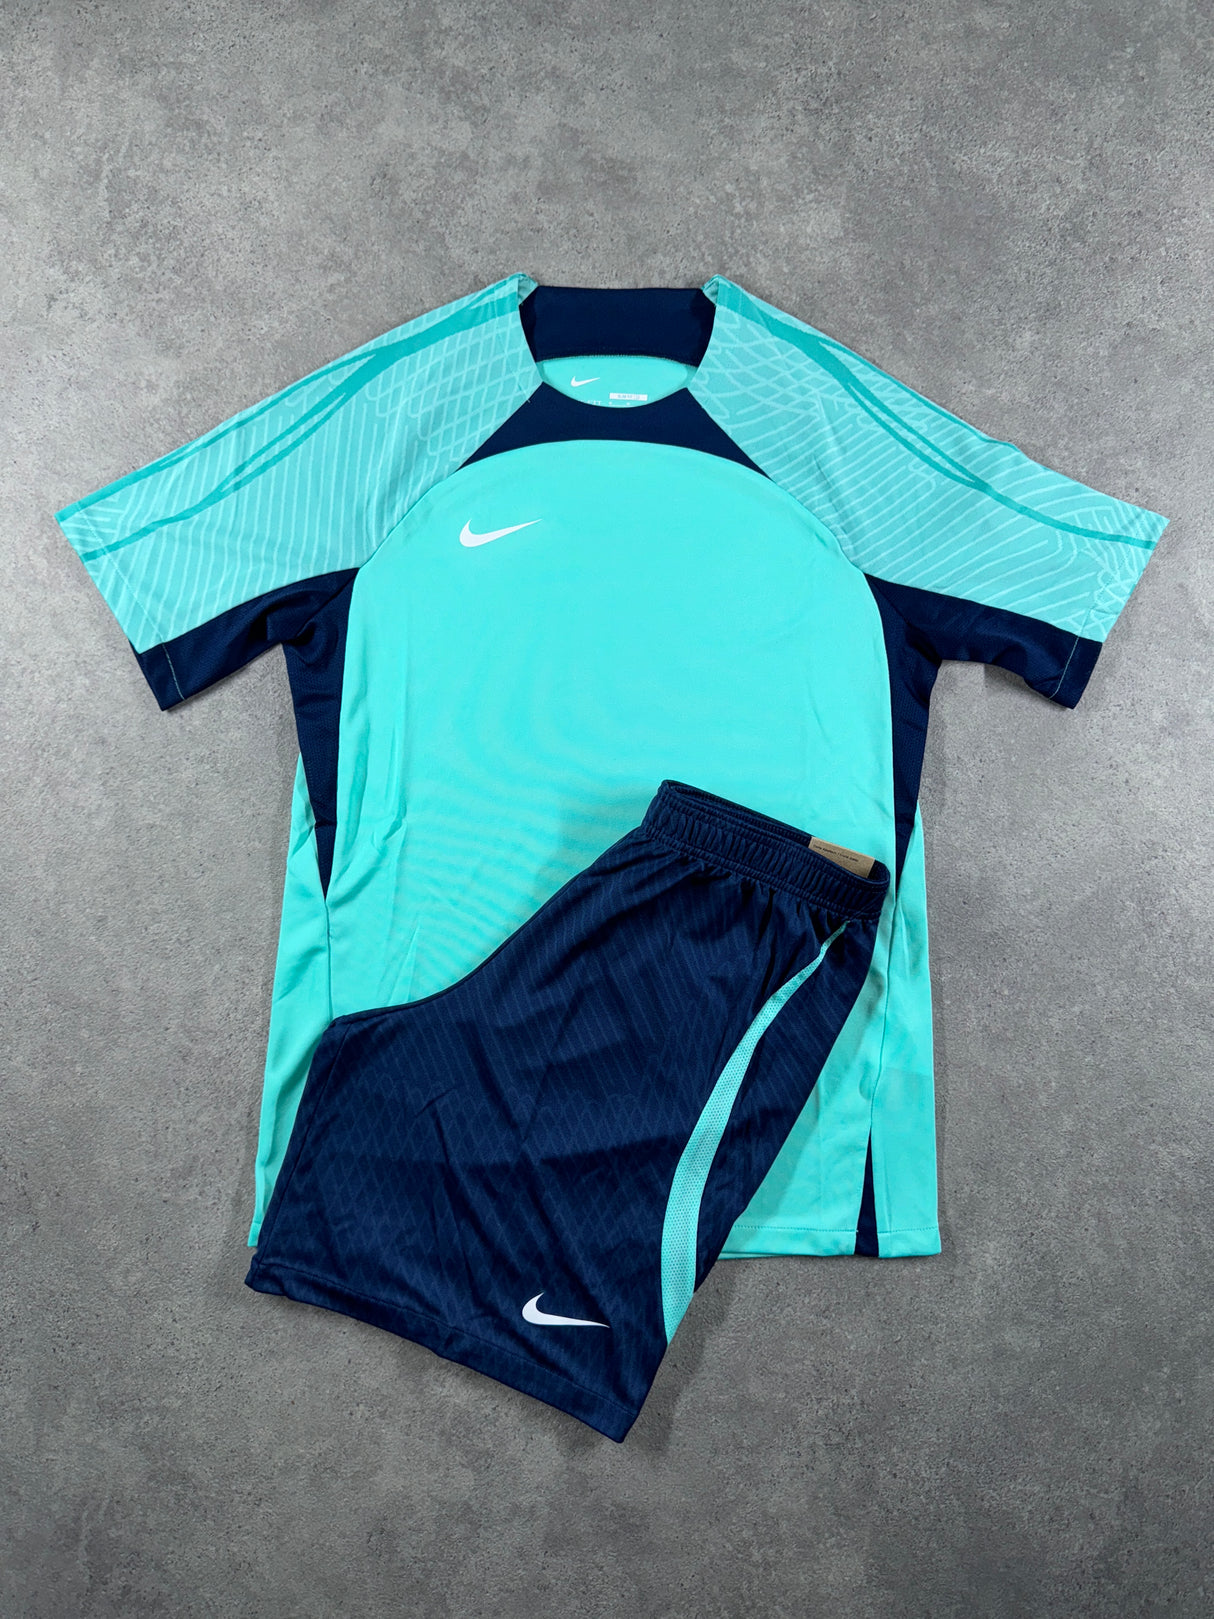 Nike - Strike Set - Hyper Turquoise/Navy